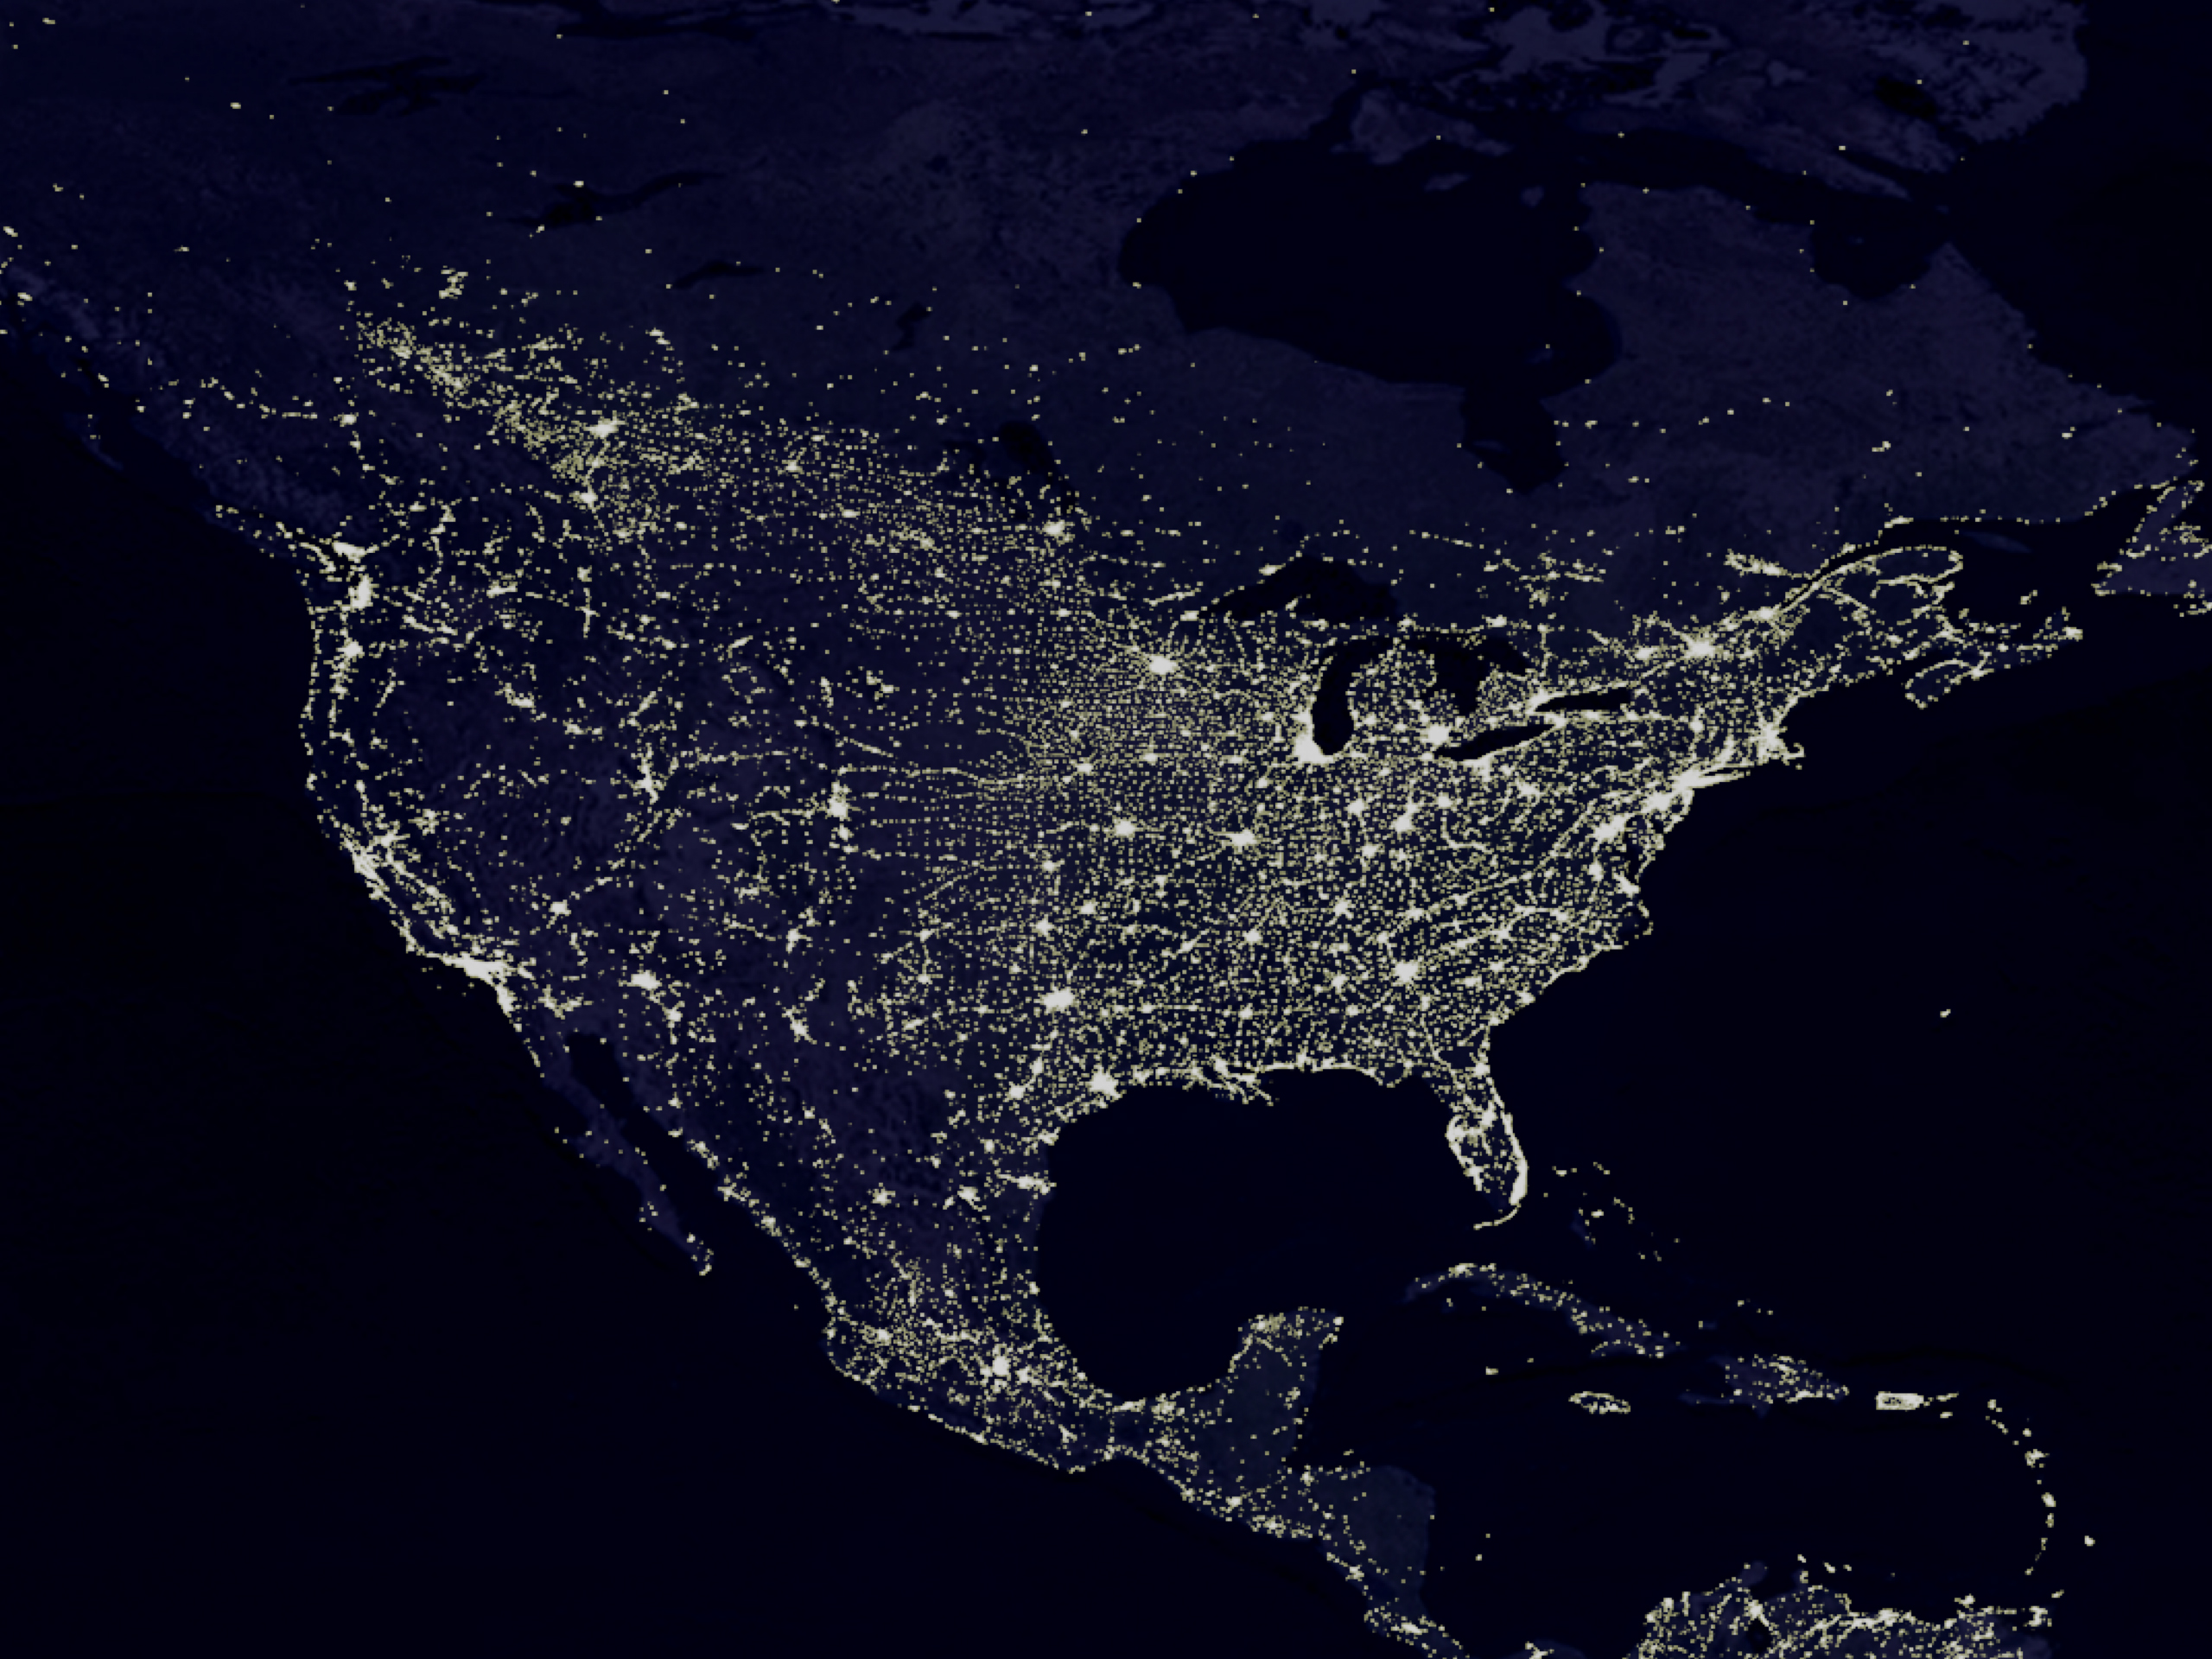 night, maps, city lights - desktop wallpaper